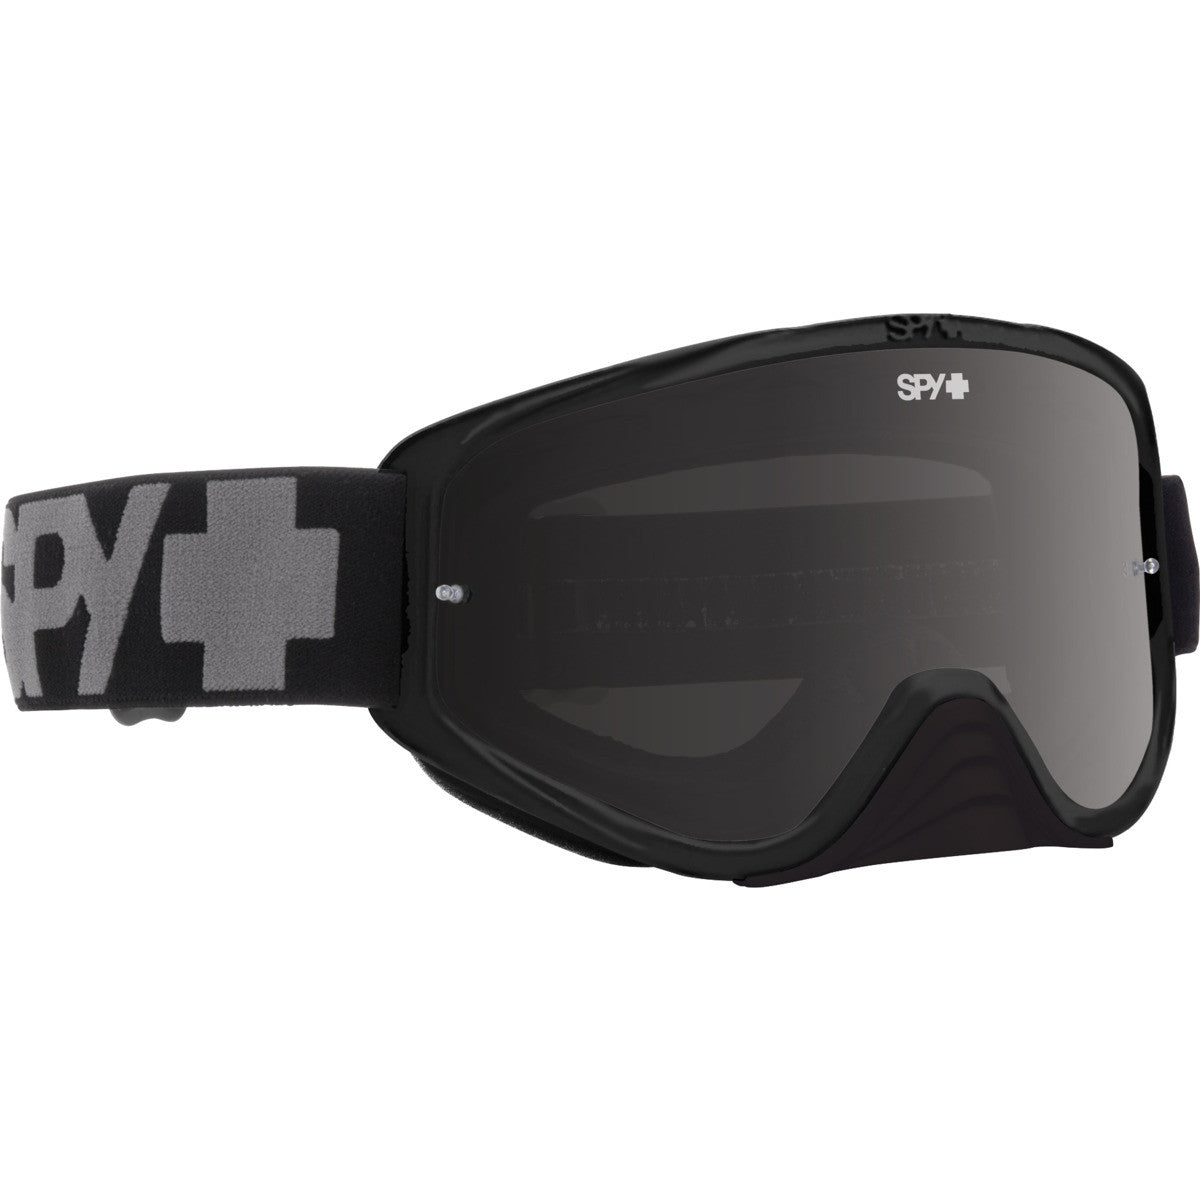 Spy Woot Goggles  Black Sand Small, Small-Medium, Medium, Medium-Large M 56-58